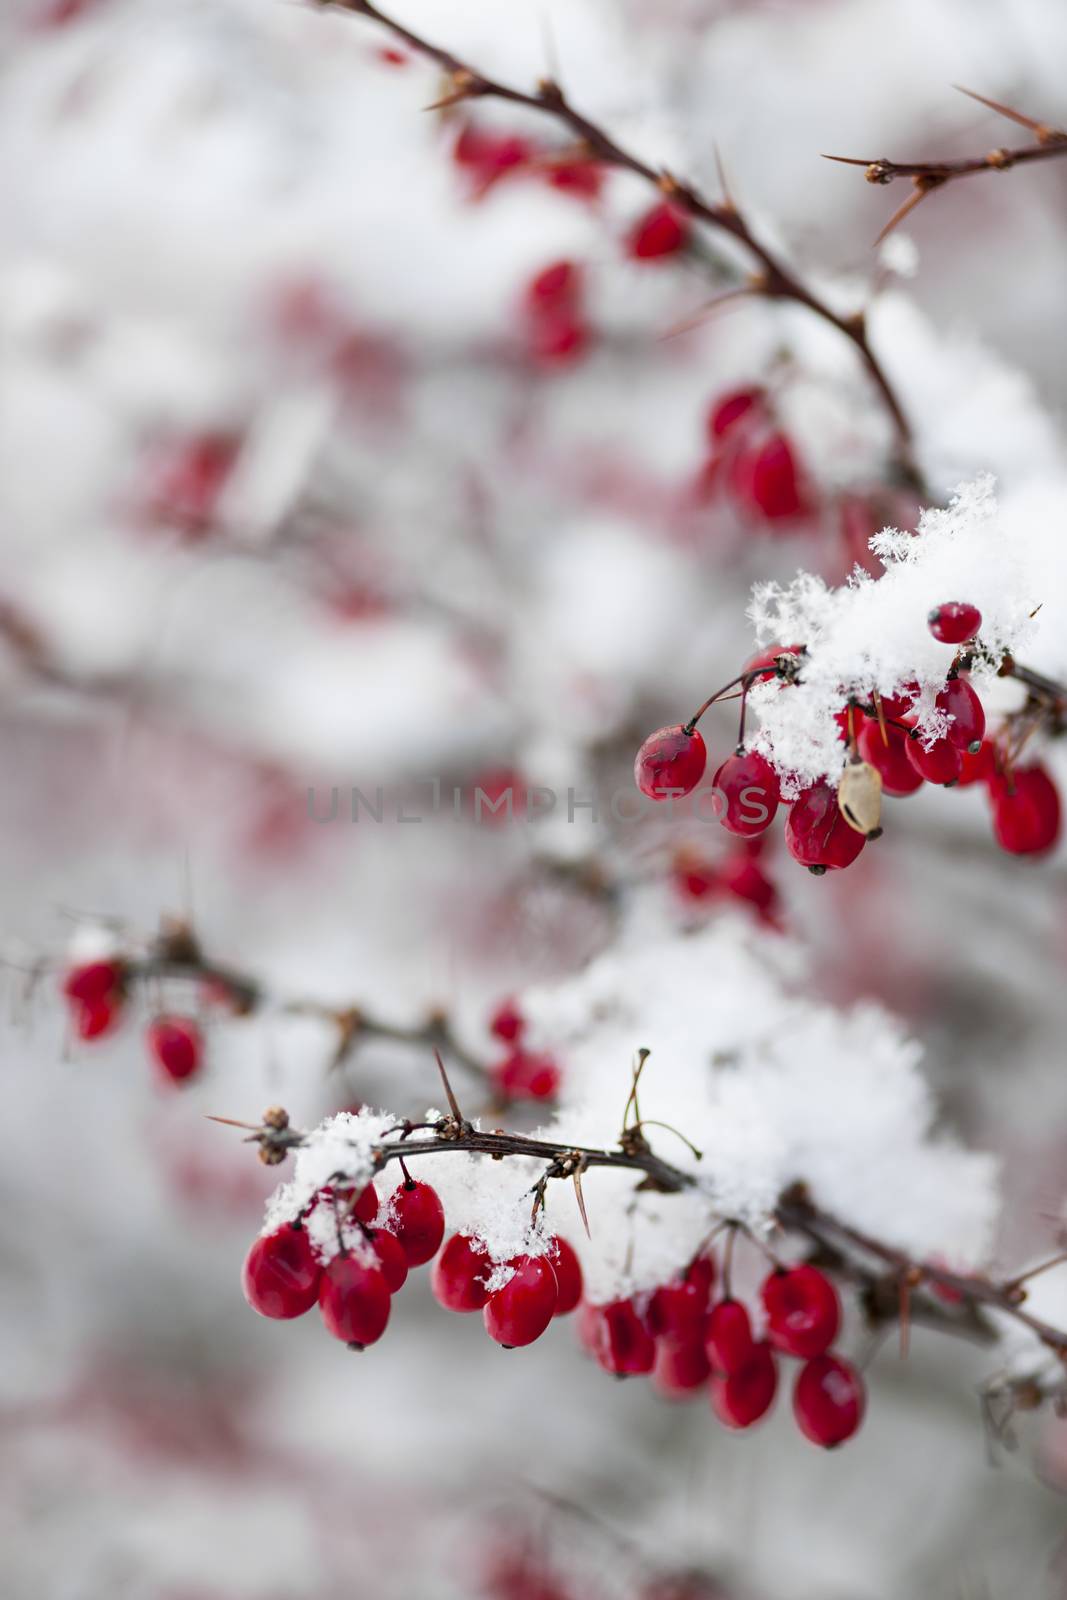 Red winter berries under snow by elenathewise